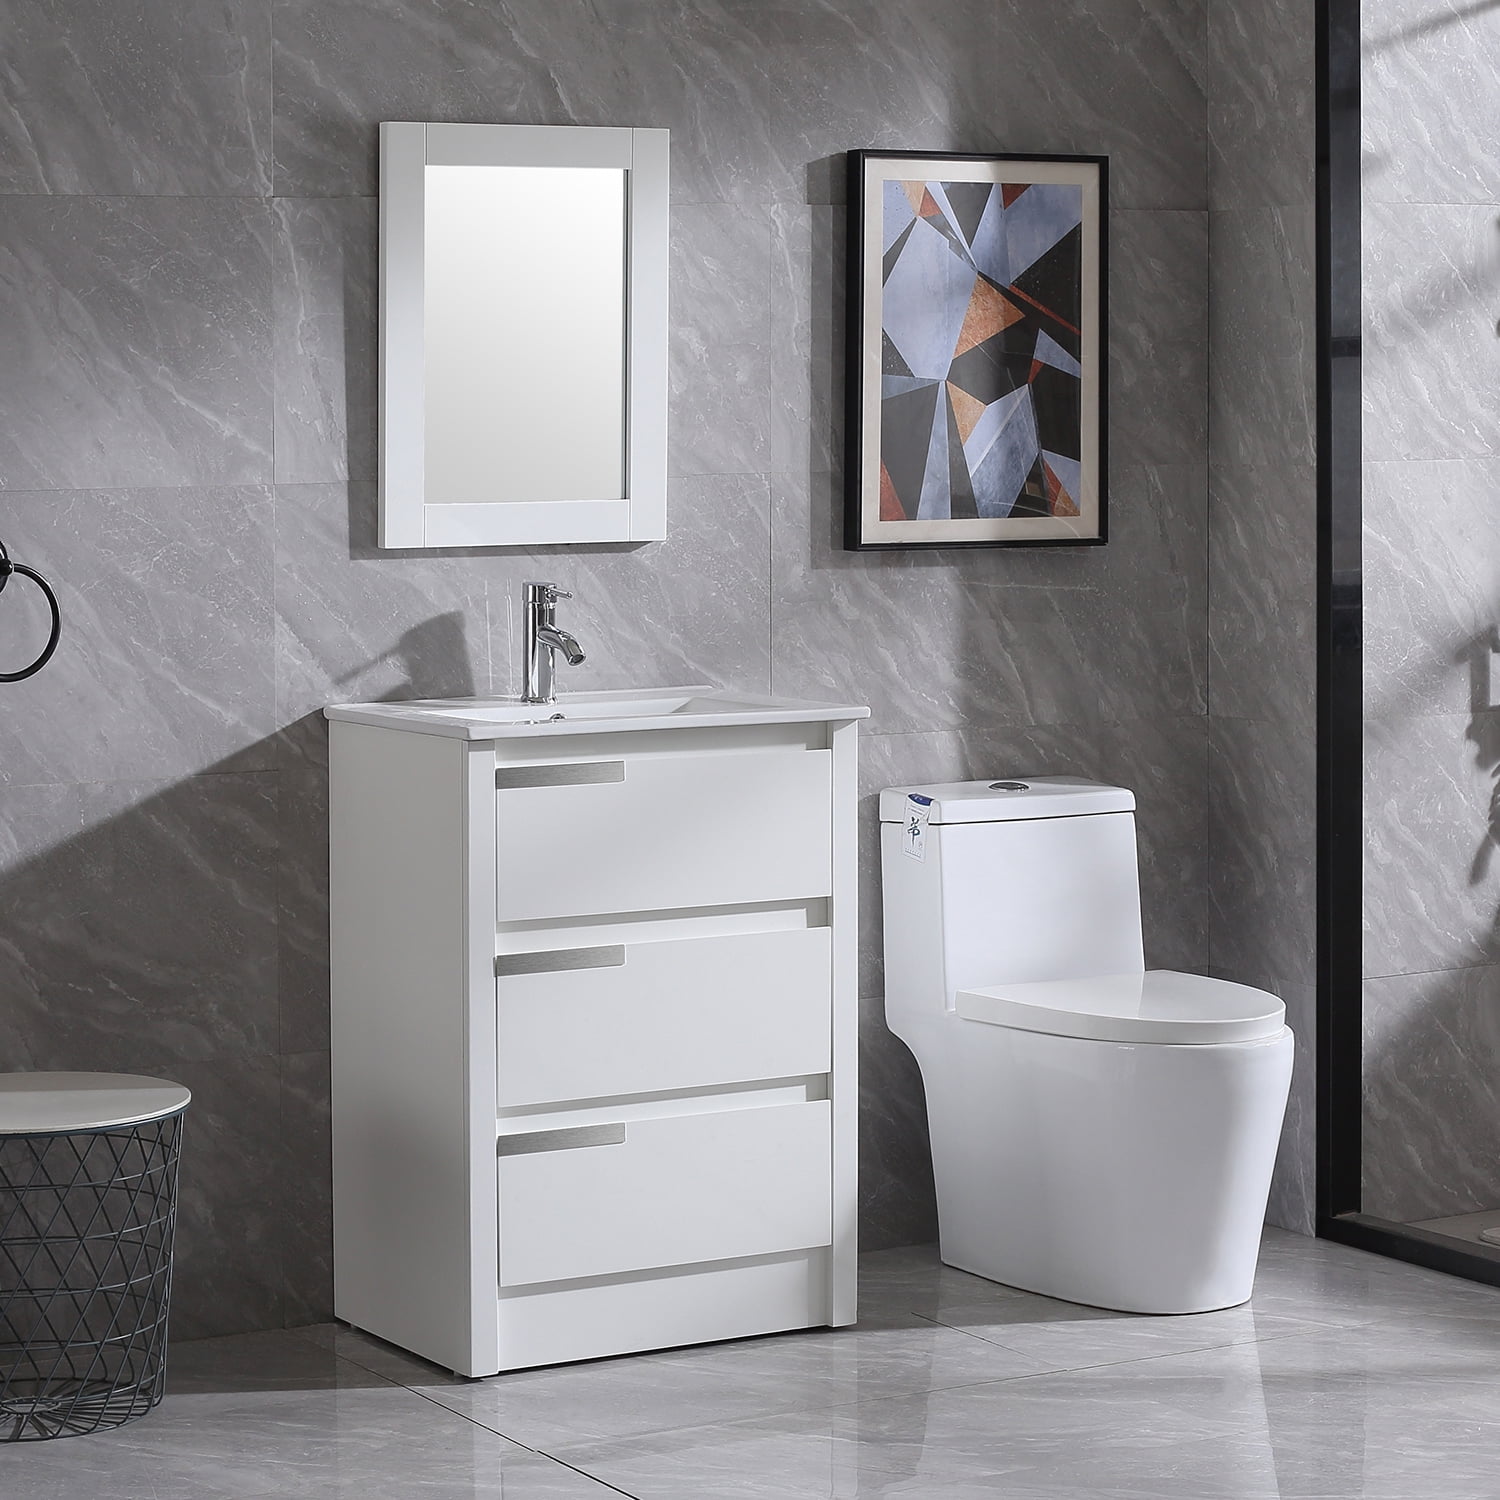 24" White Bathroom Vanity Cabinet Mirror W/Overflow Drop in Ceramic Vessel Sink 